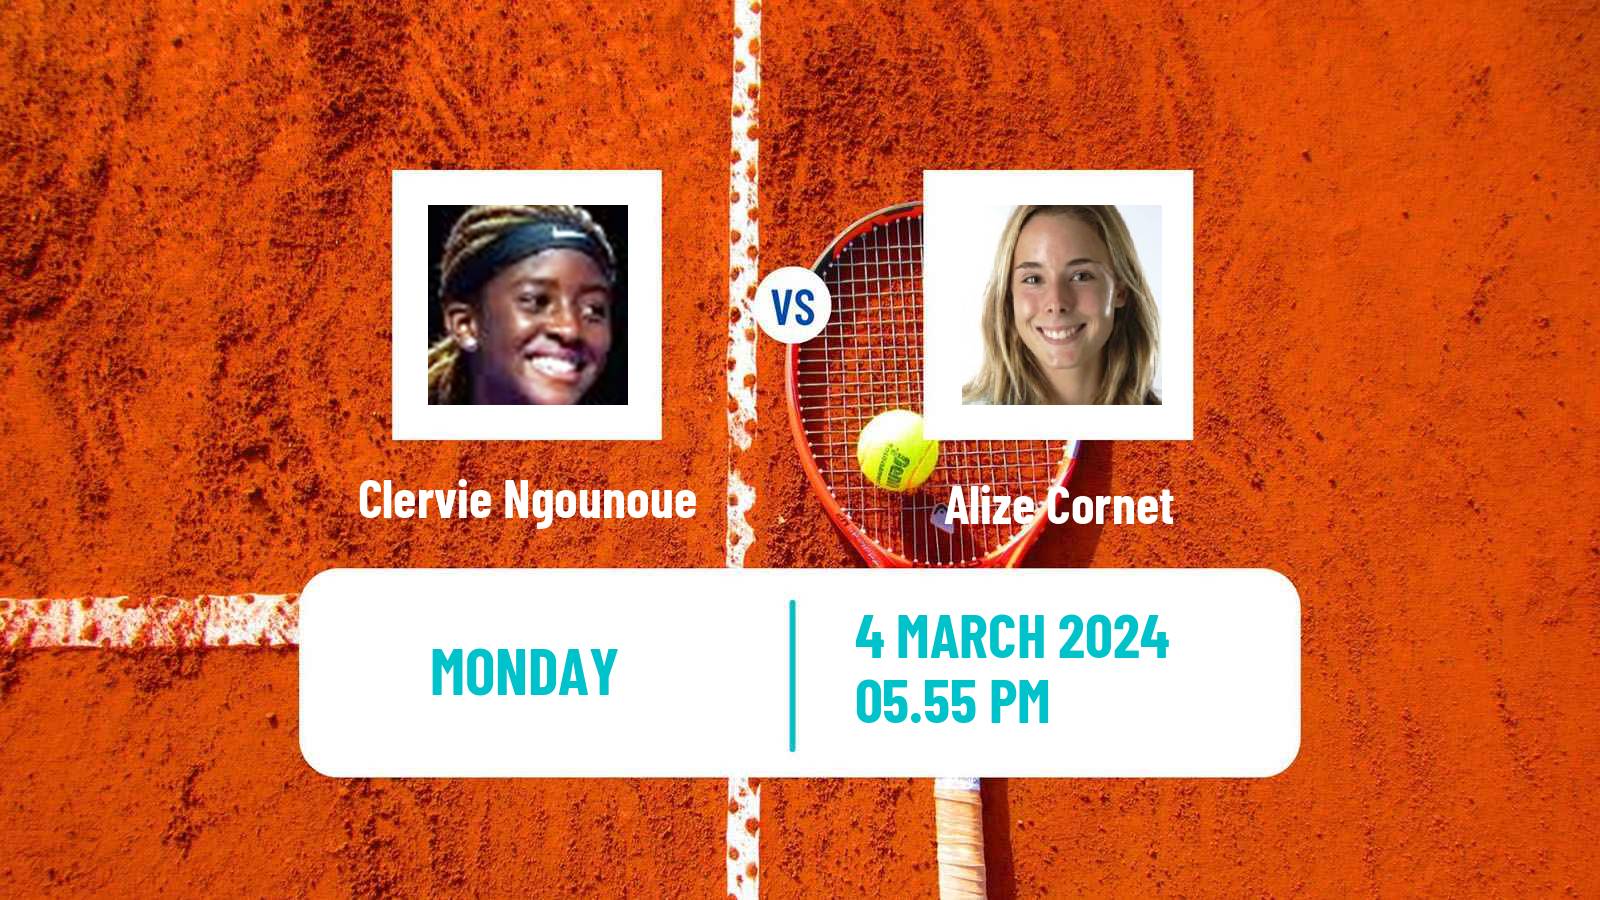 Tennis WTA Indian Wells Clervie Ngounoue - Alize Cornet